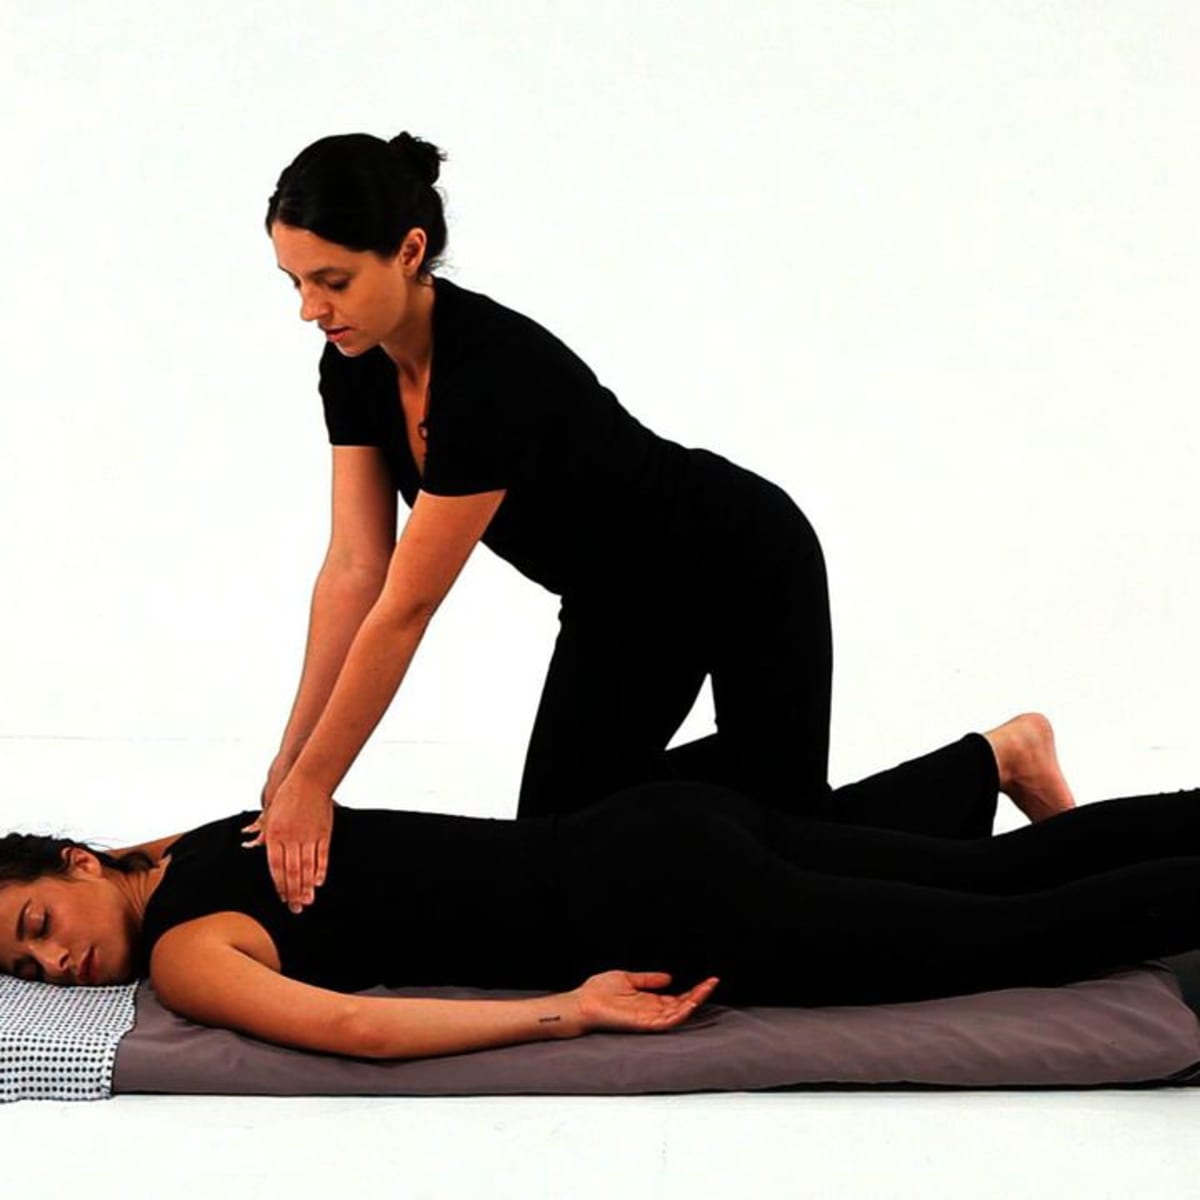 How to Use Your Feet in Shiatsu Massage - Howcast